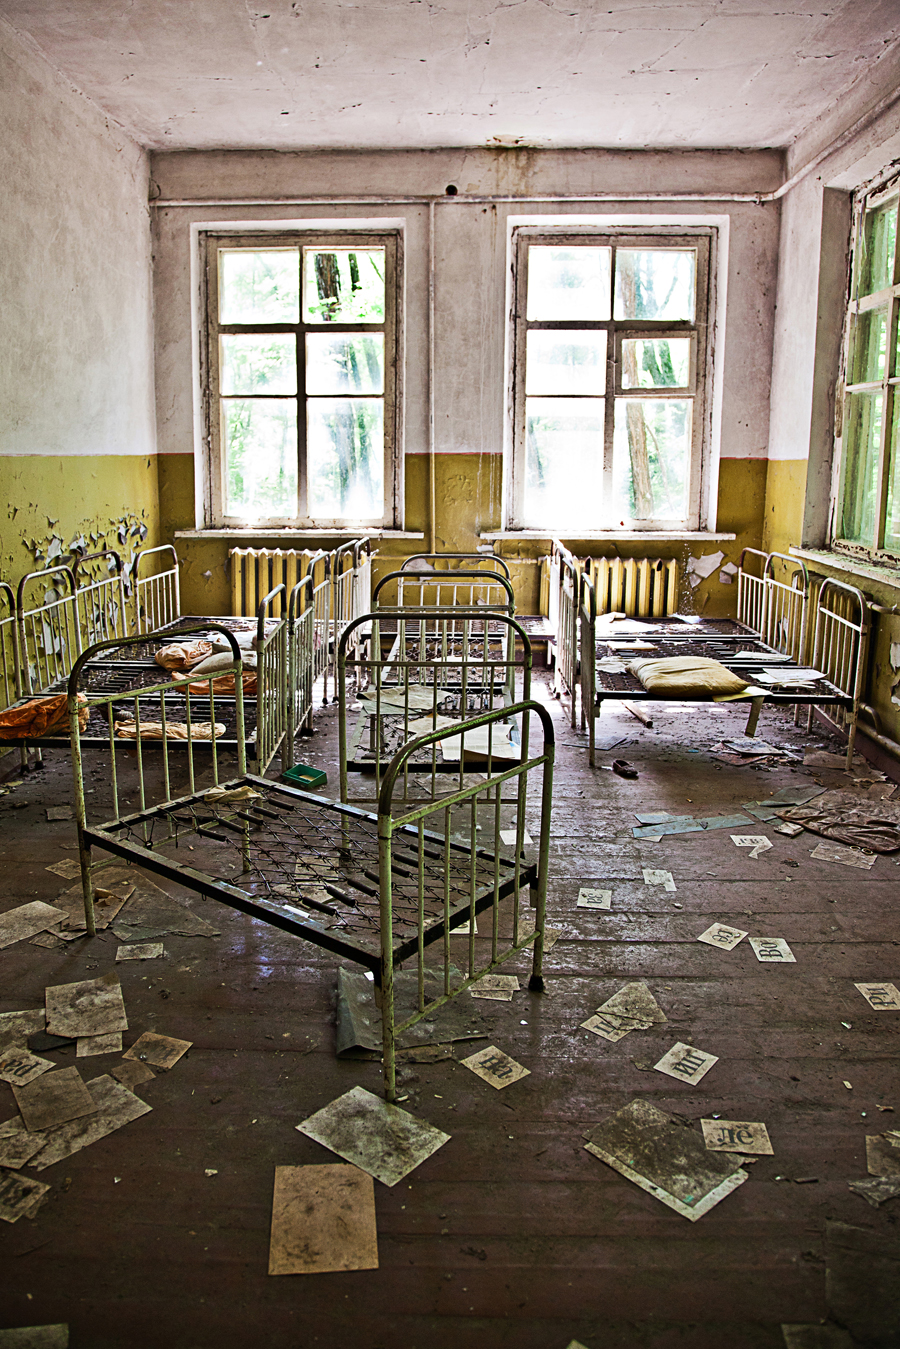 Abandoned Bedroom Near Chernobyl